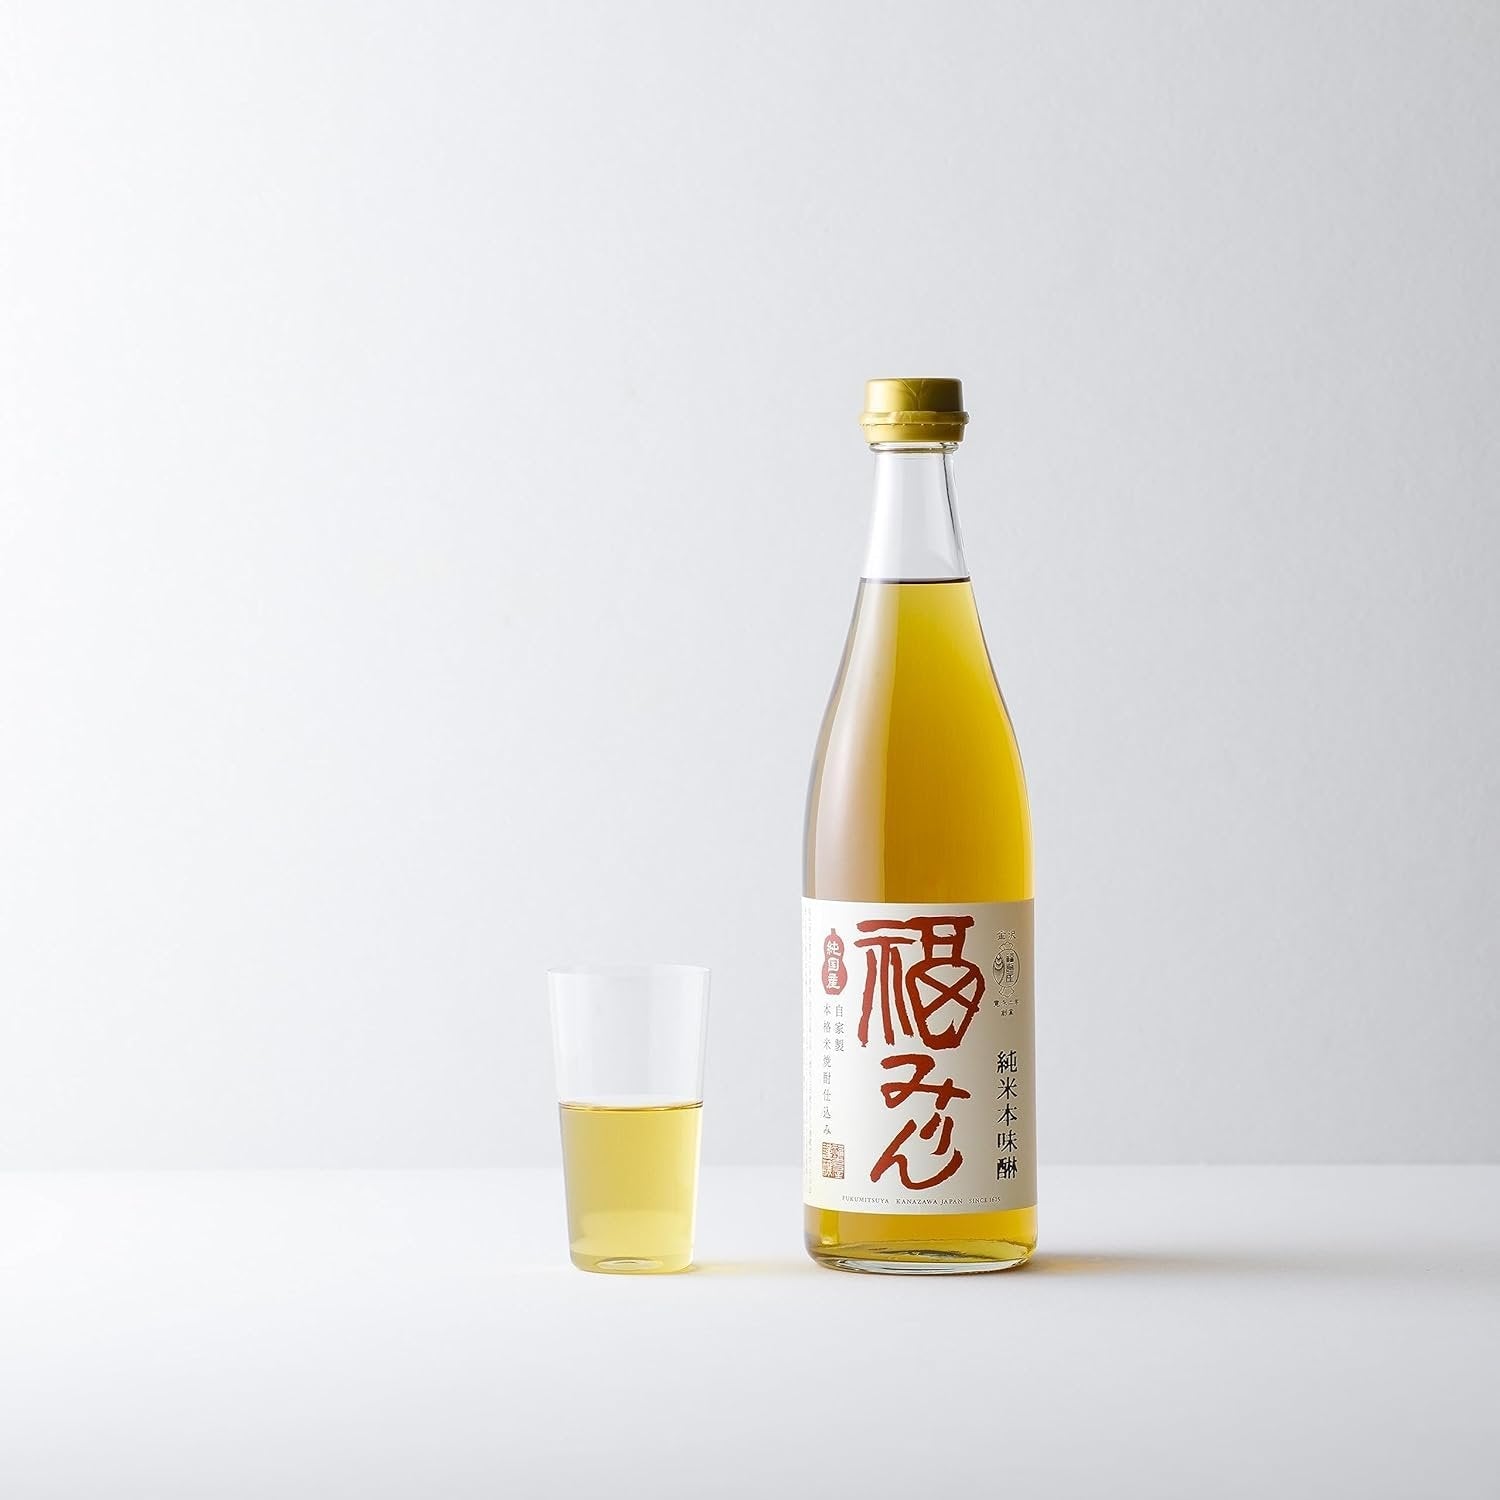 Fukumitsuya Junmai Hon Mirin Additive-Free Sweet Rice Wine 720ml